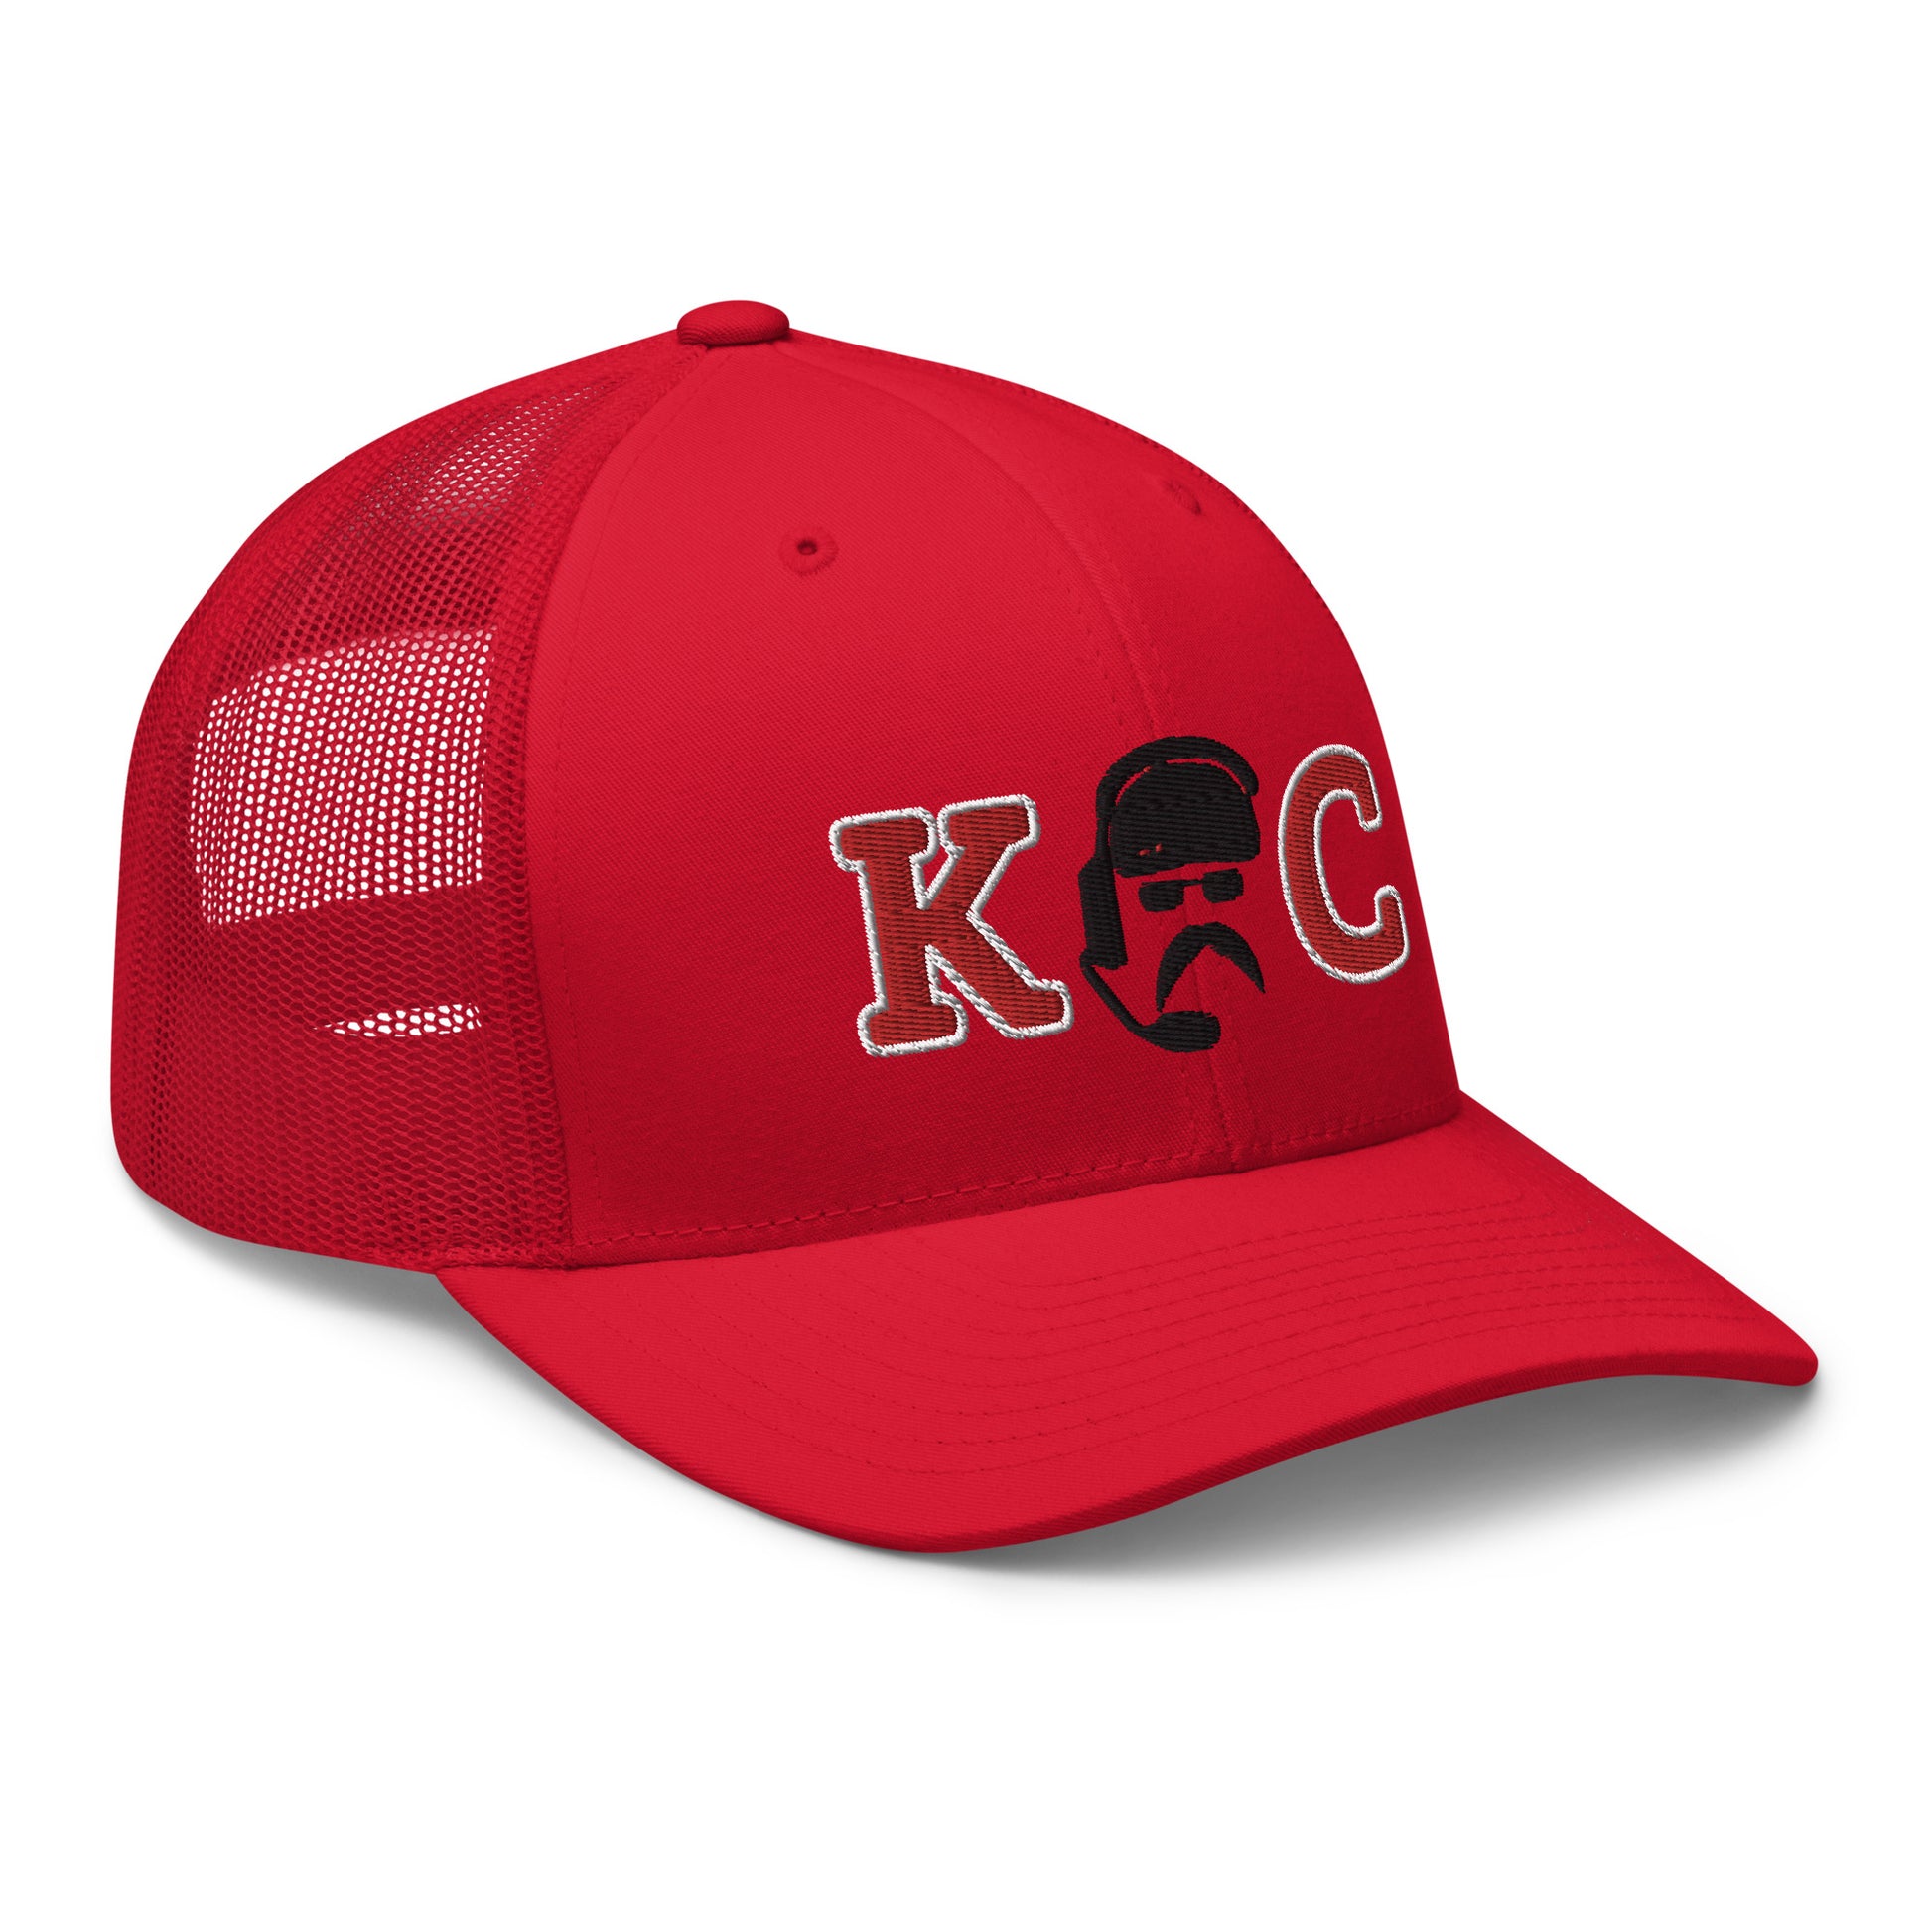 Andy Reid’s Hat / Kansas City Hat / Kansas City Chiefs Trucker Cap